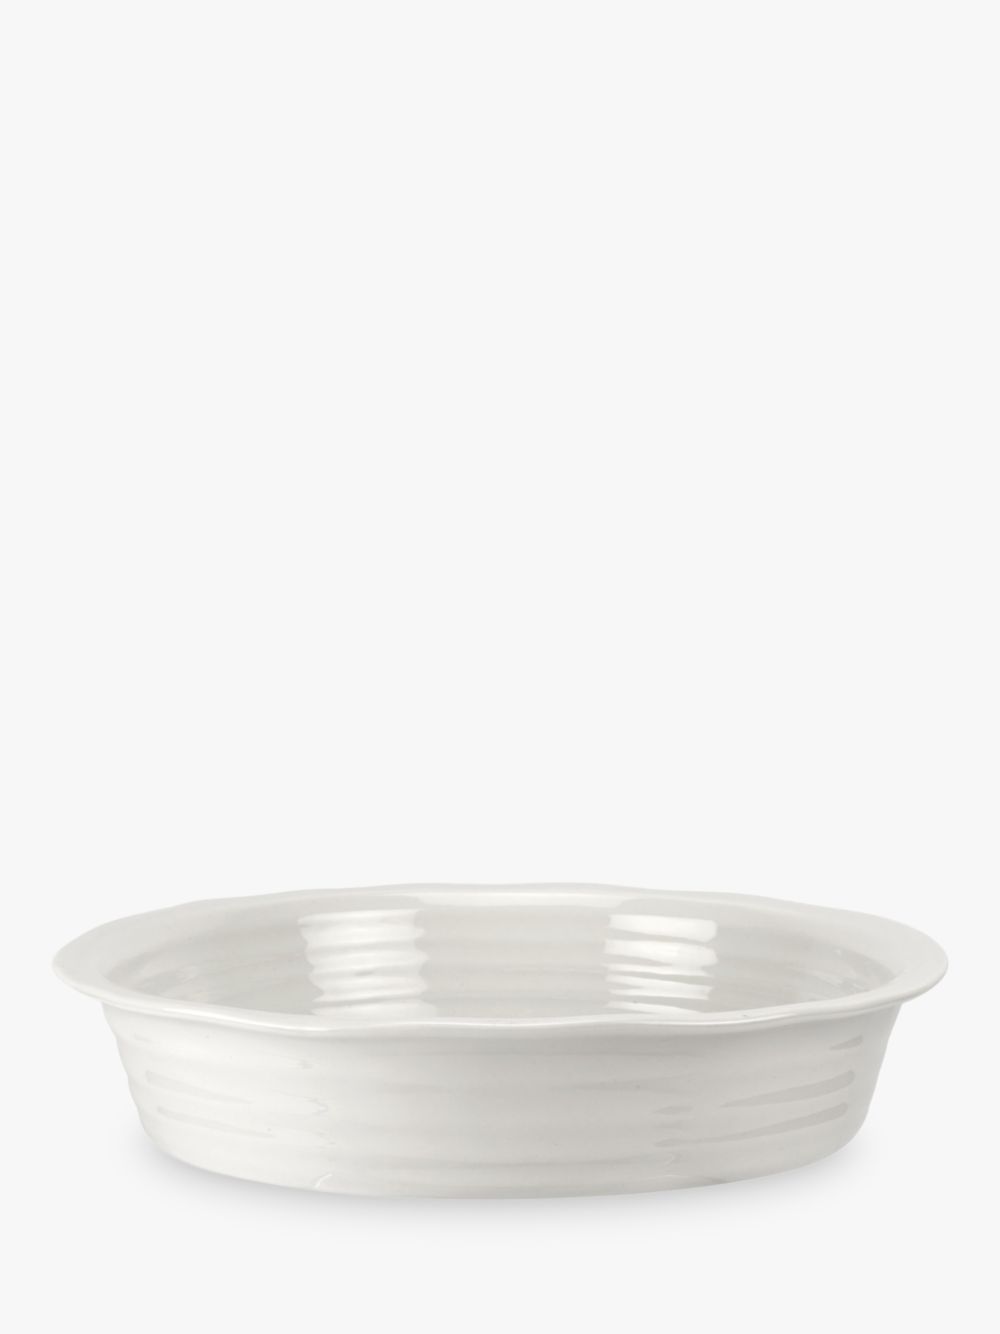 Фарфоровая круглая форма для пирога Sophie Conran for Portmeirion, 27 см, белая круглая форма для пирога 24 см tefal chefclub j5679602